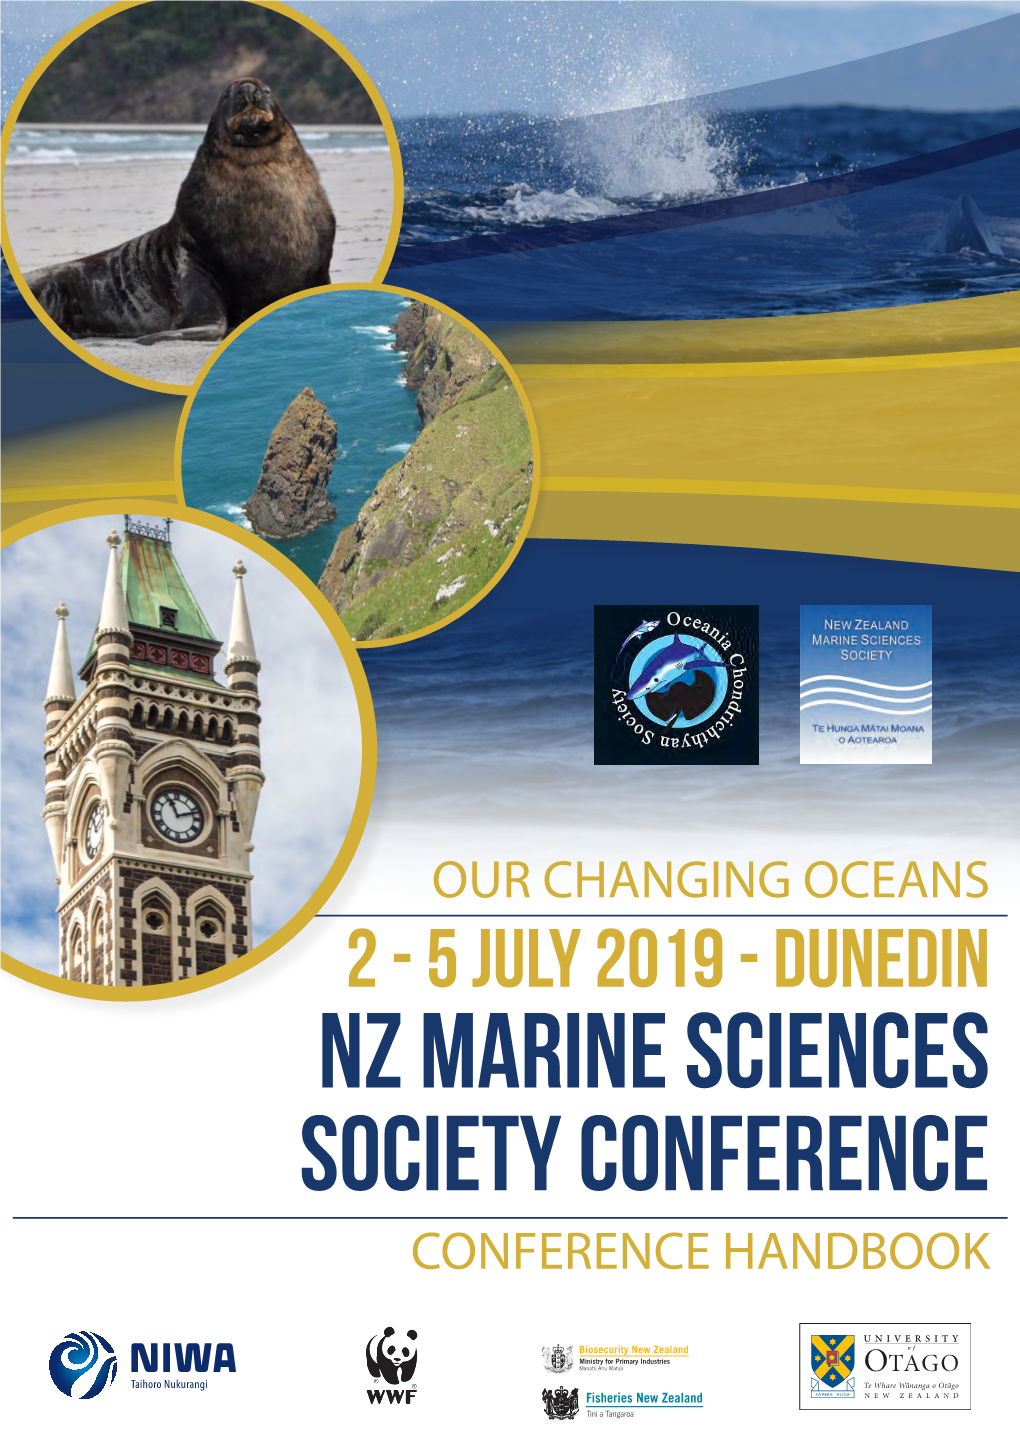 NZ Marine Sciences Society Conference CONFERENCE HANDBOOK